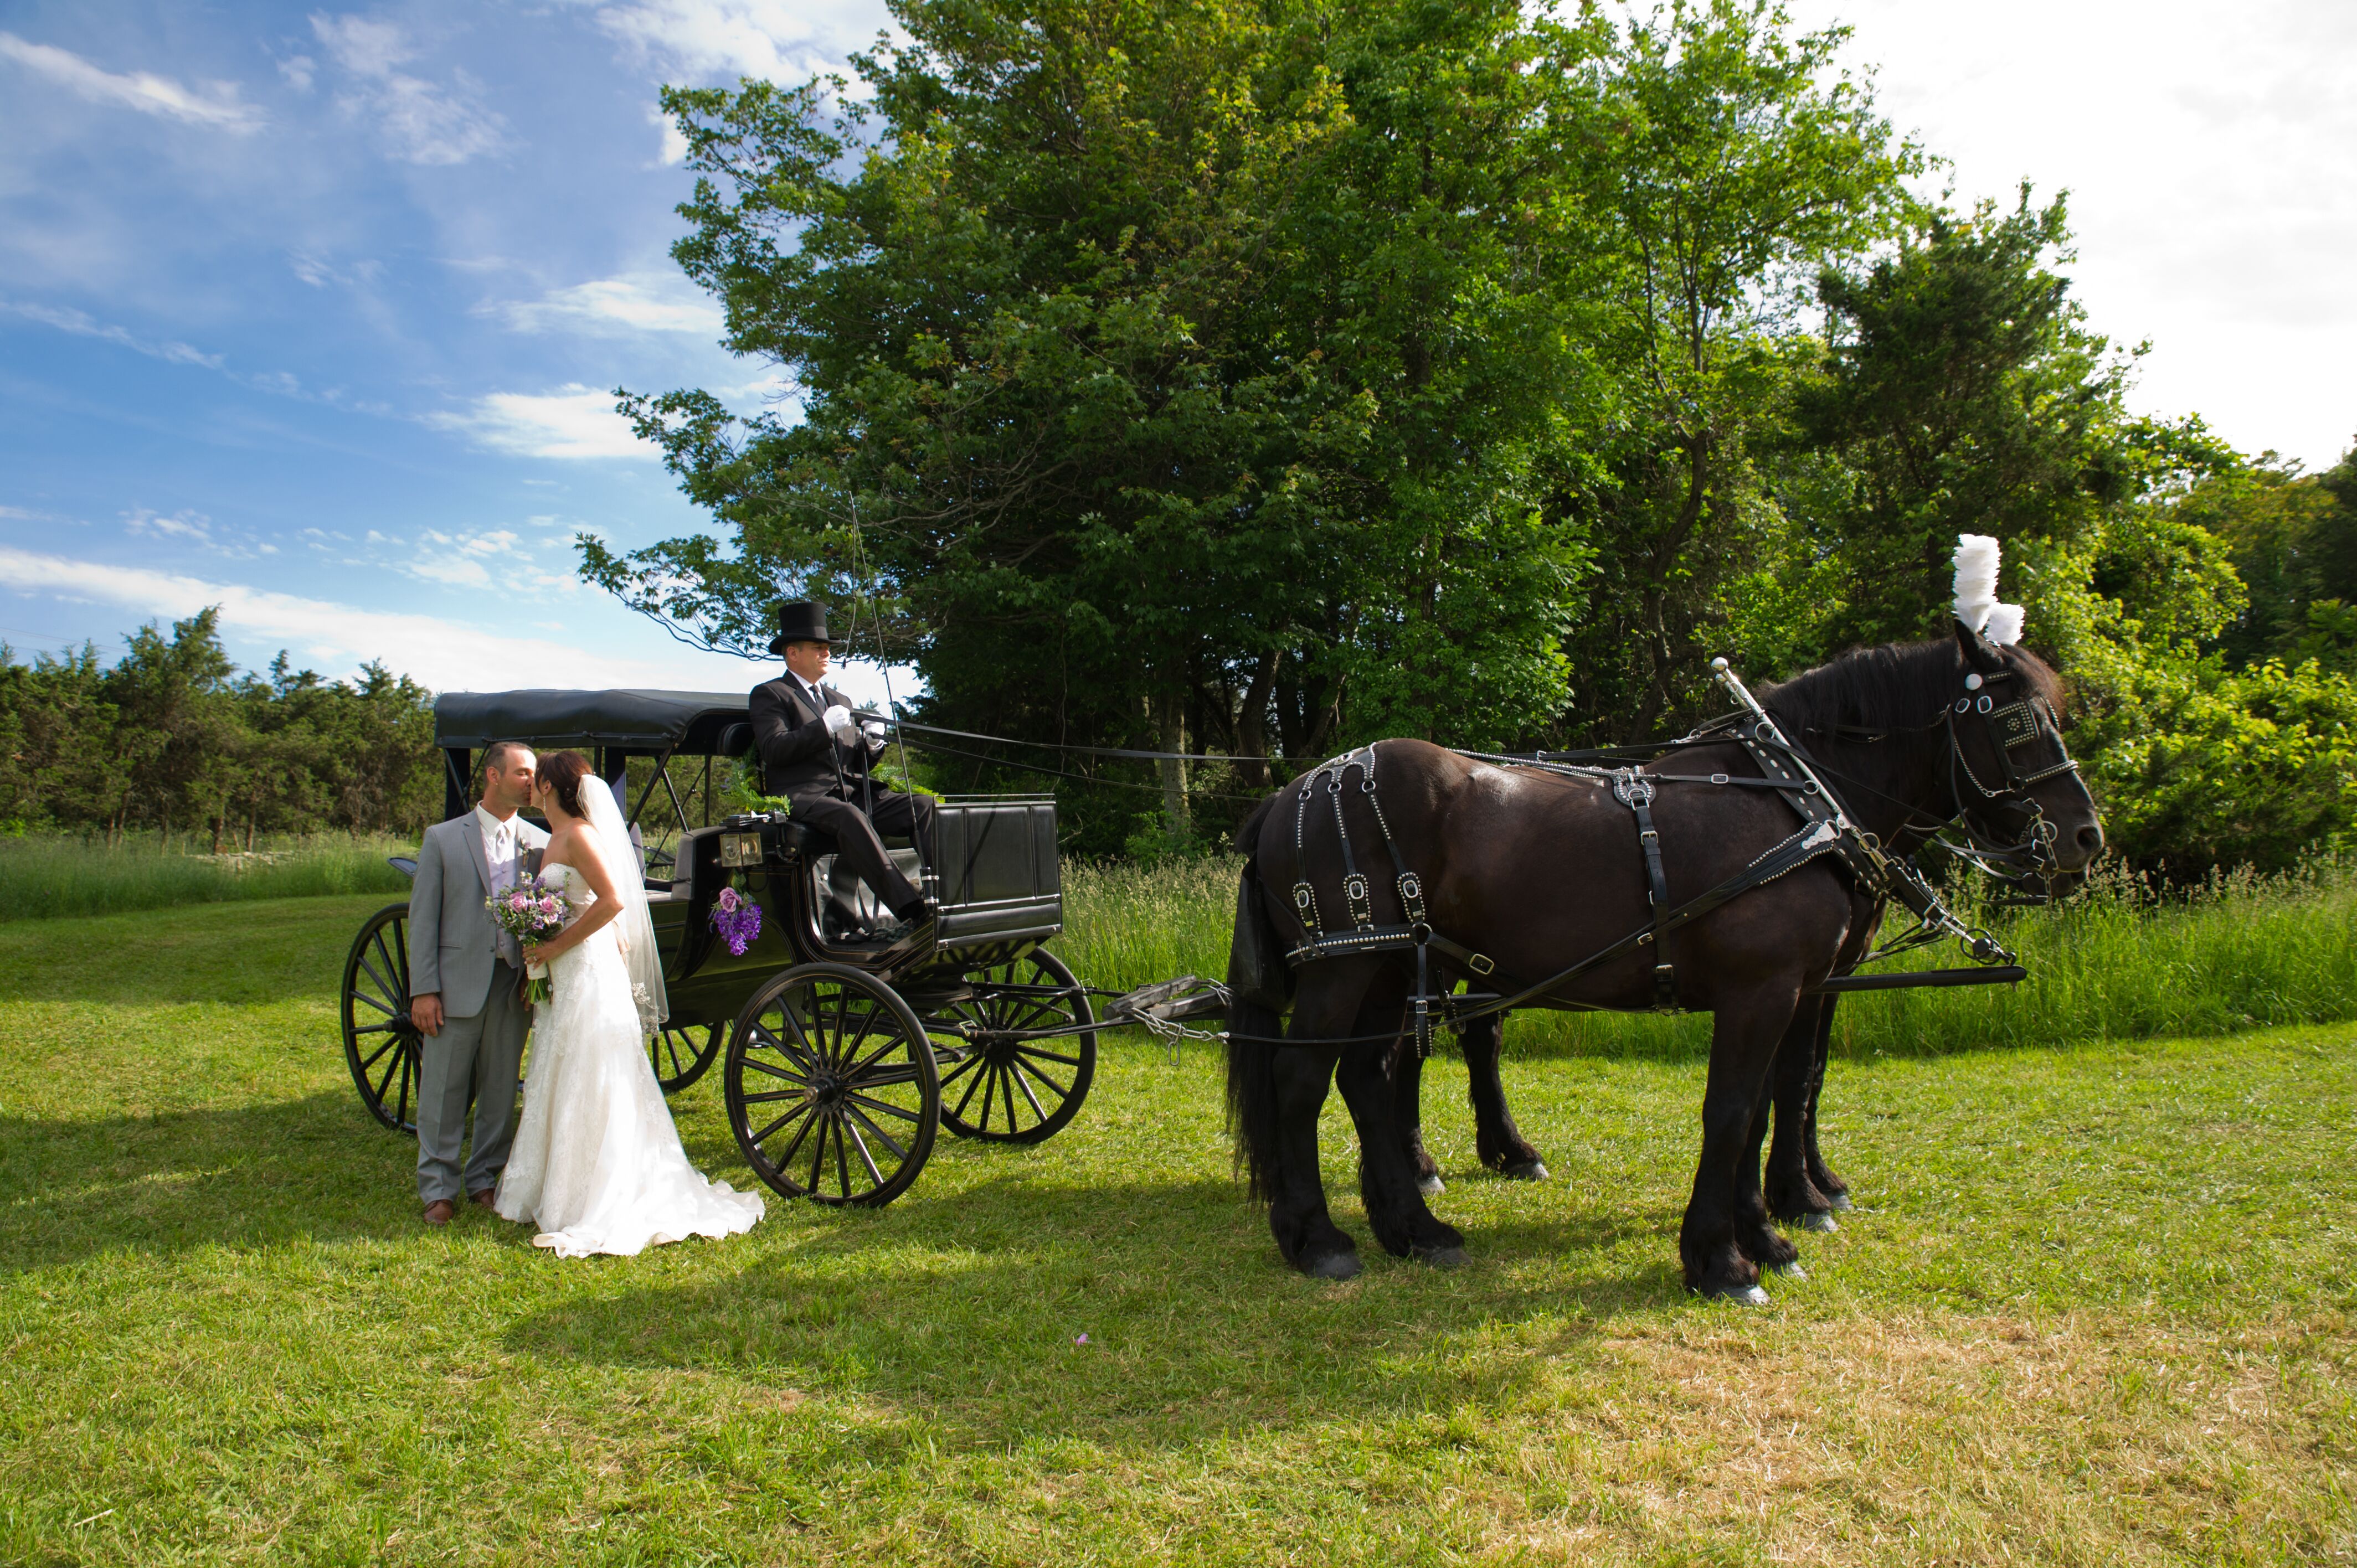 Photos by Cheryl | Wedding Photographers - Pine Bush, NY